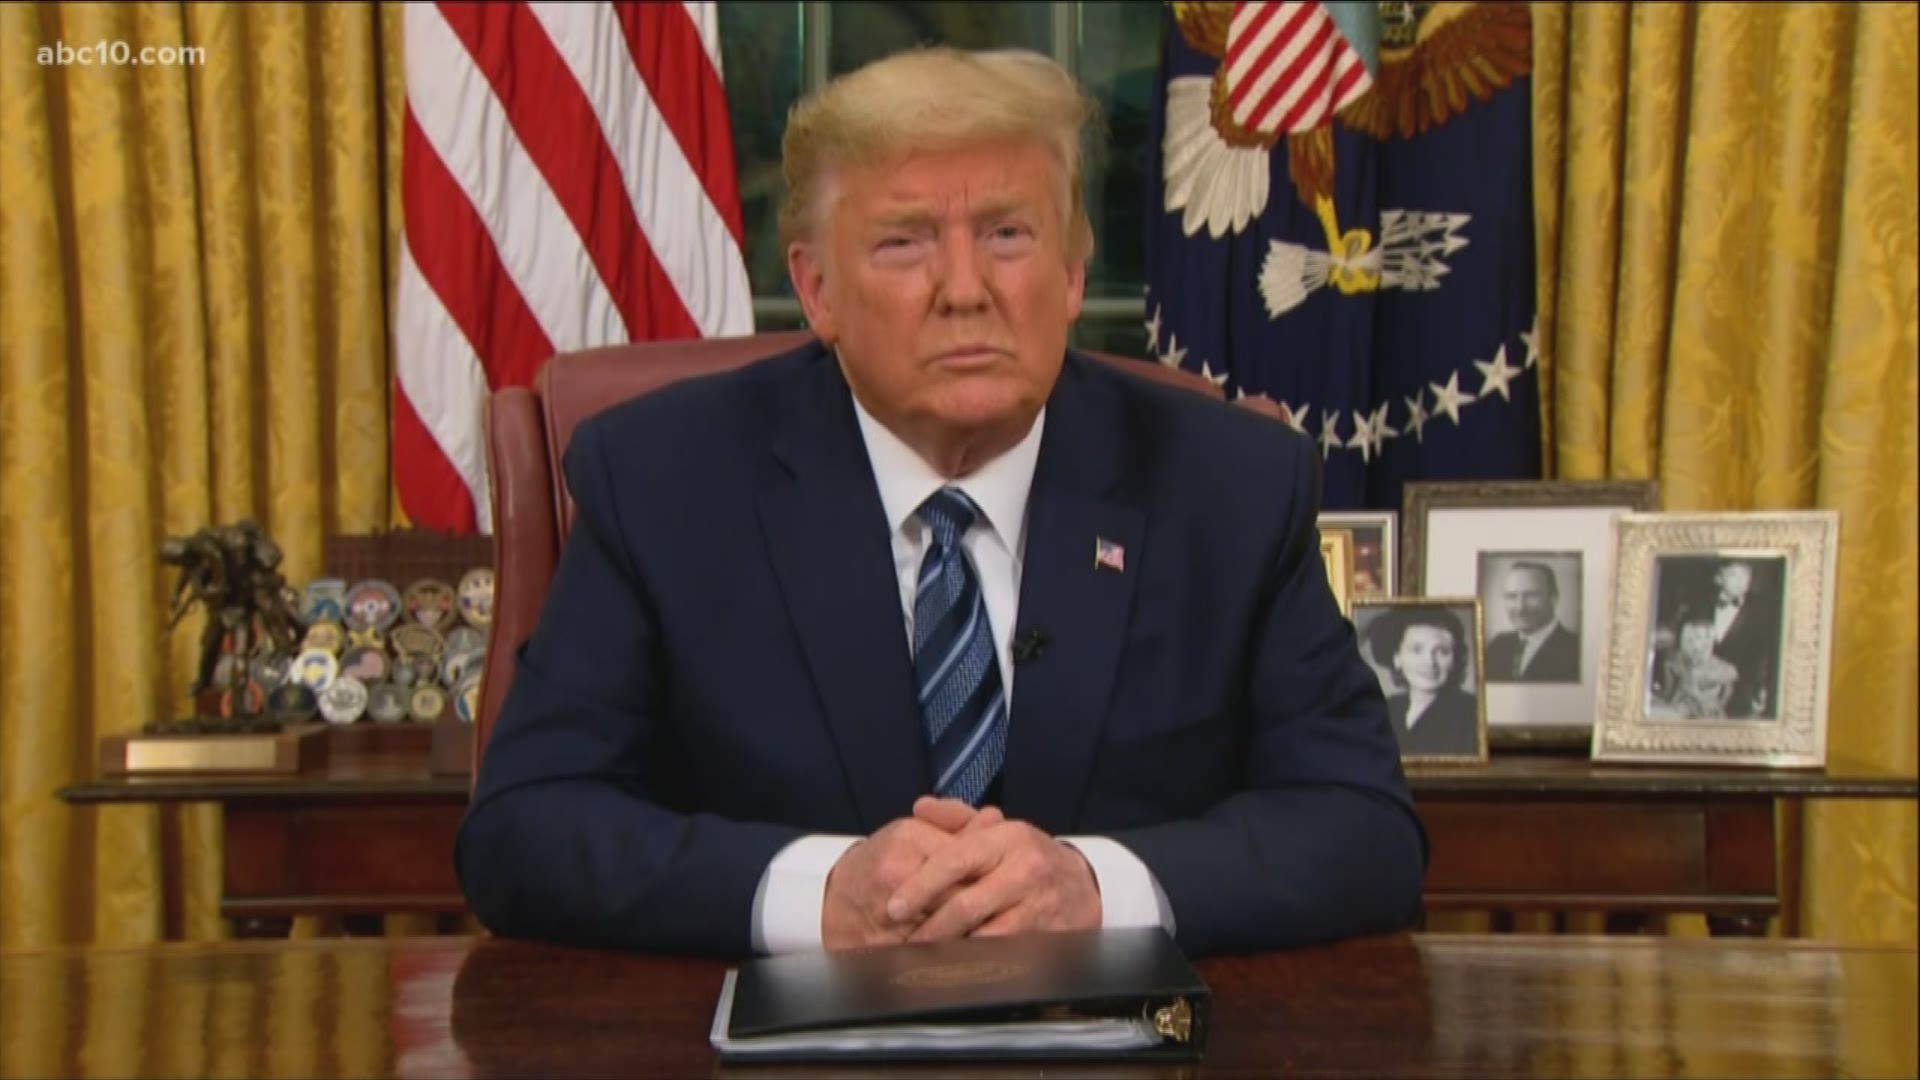 President Trump's Oval Office coronavirus address (March 11, 2020)